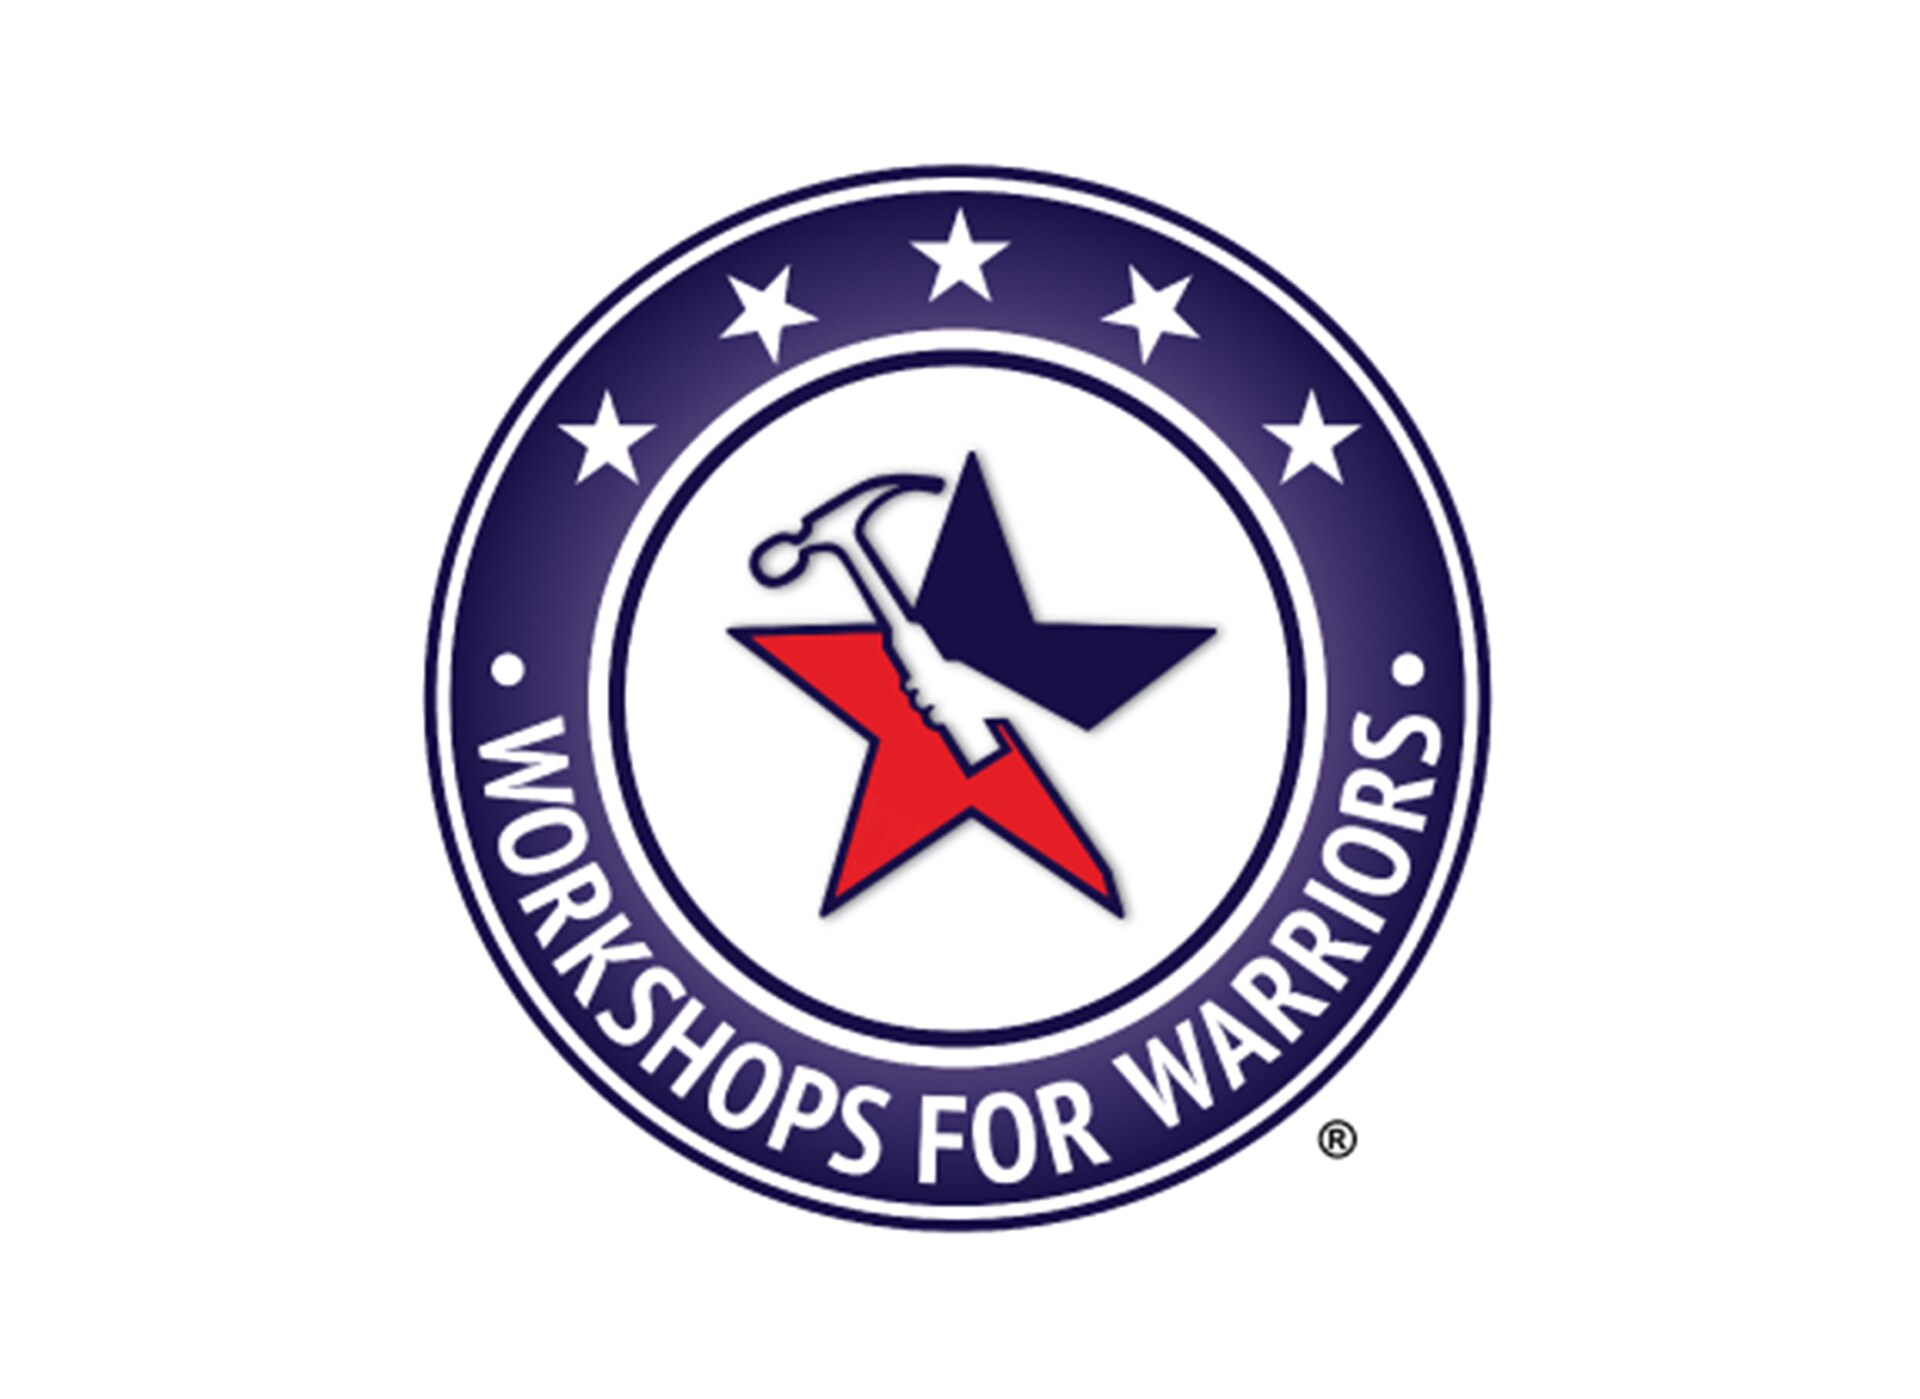 Workshops for Warriors logo